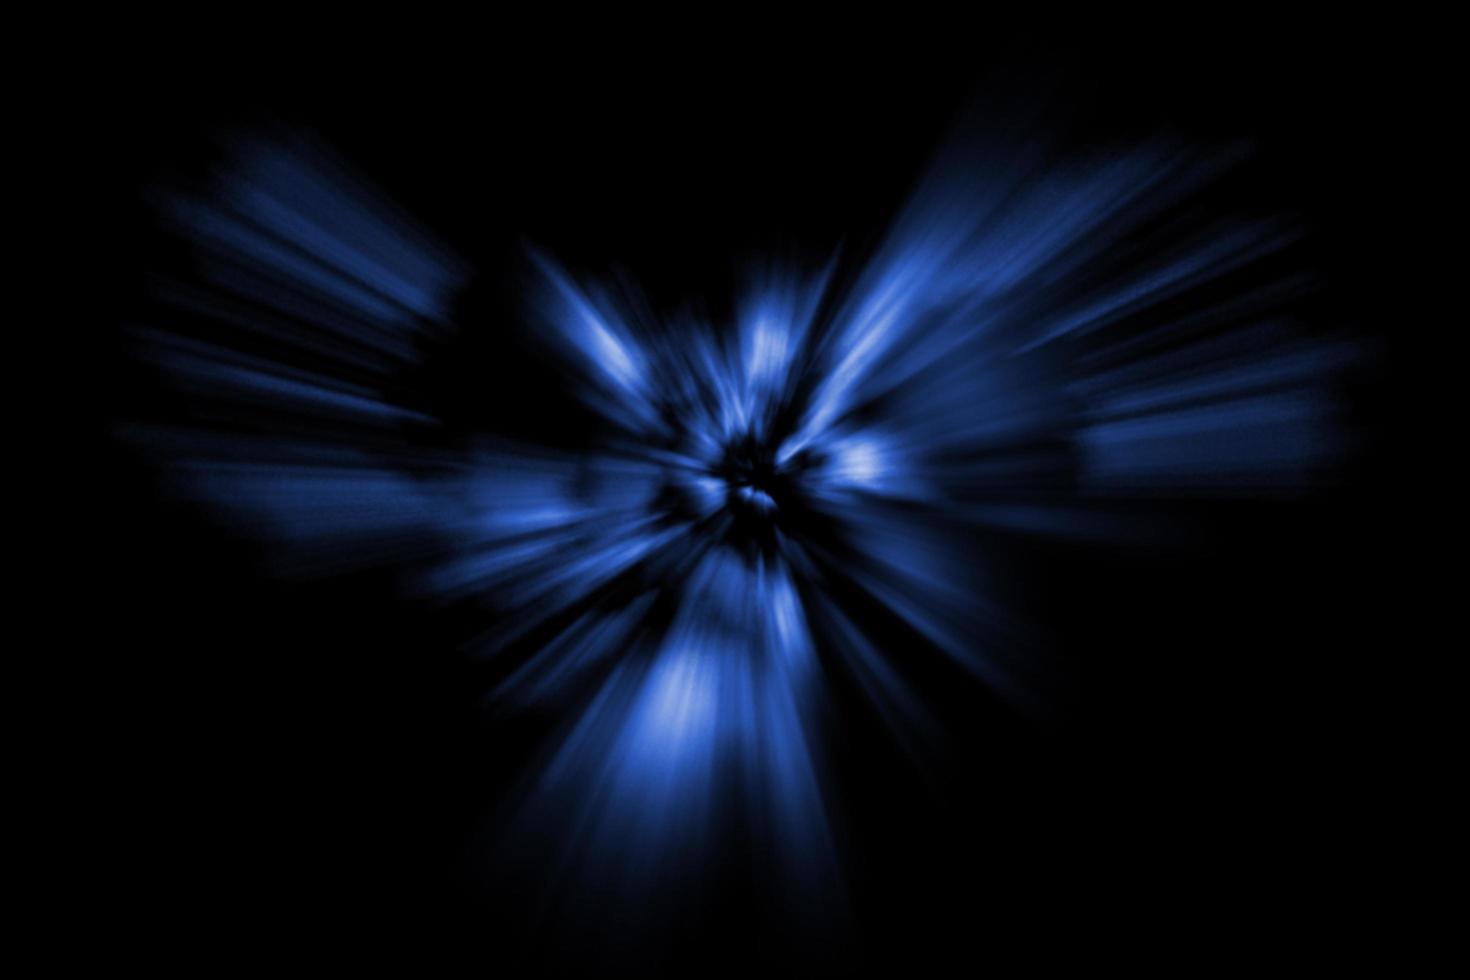 Blue beam light blast image floue, fond abstrait, effet pinceau photo